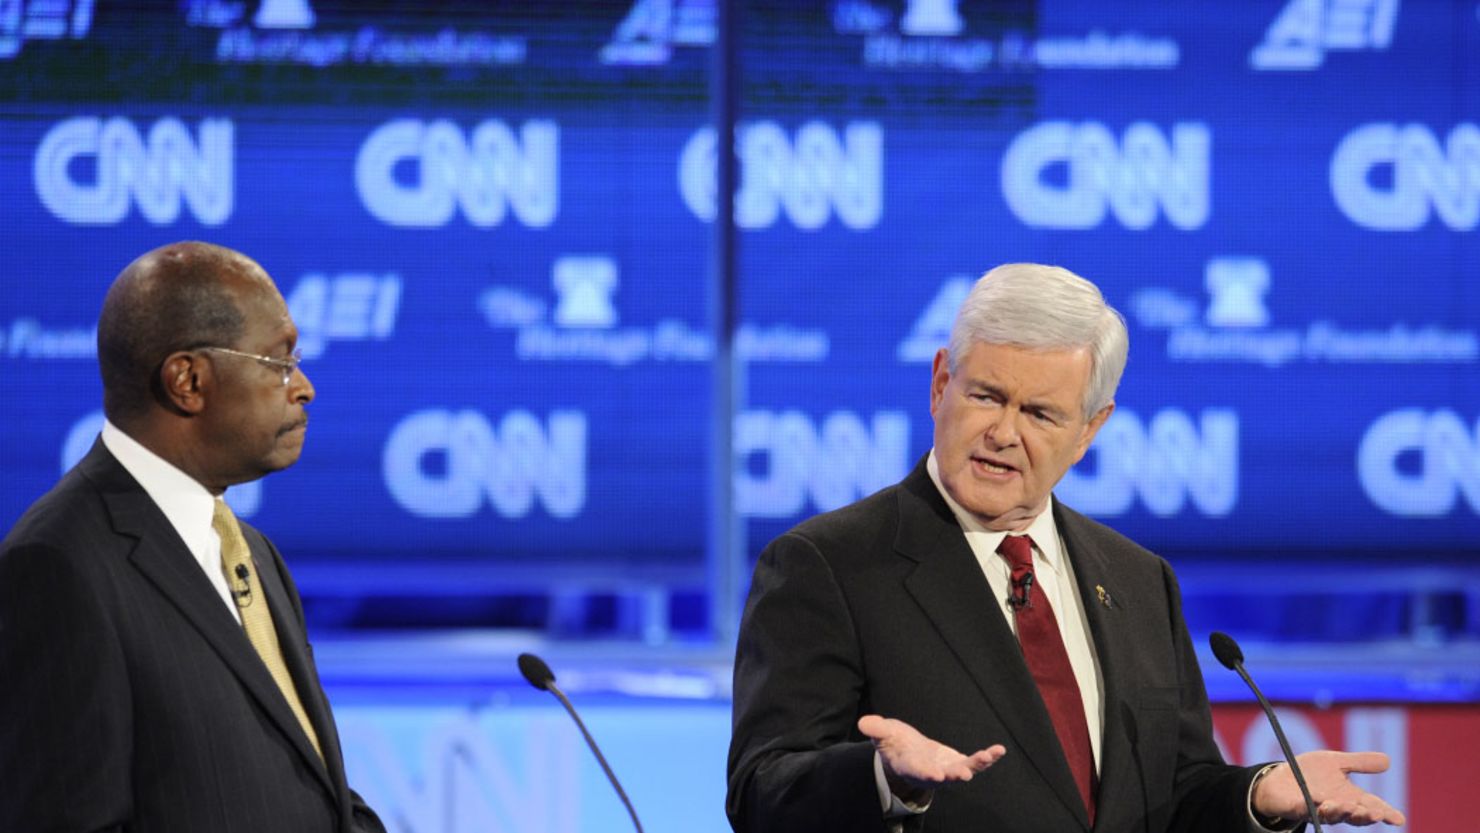 Herman Cain looks on as new GOP frontrunner Newt Gingrich speaks at CNN debate.